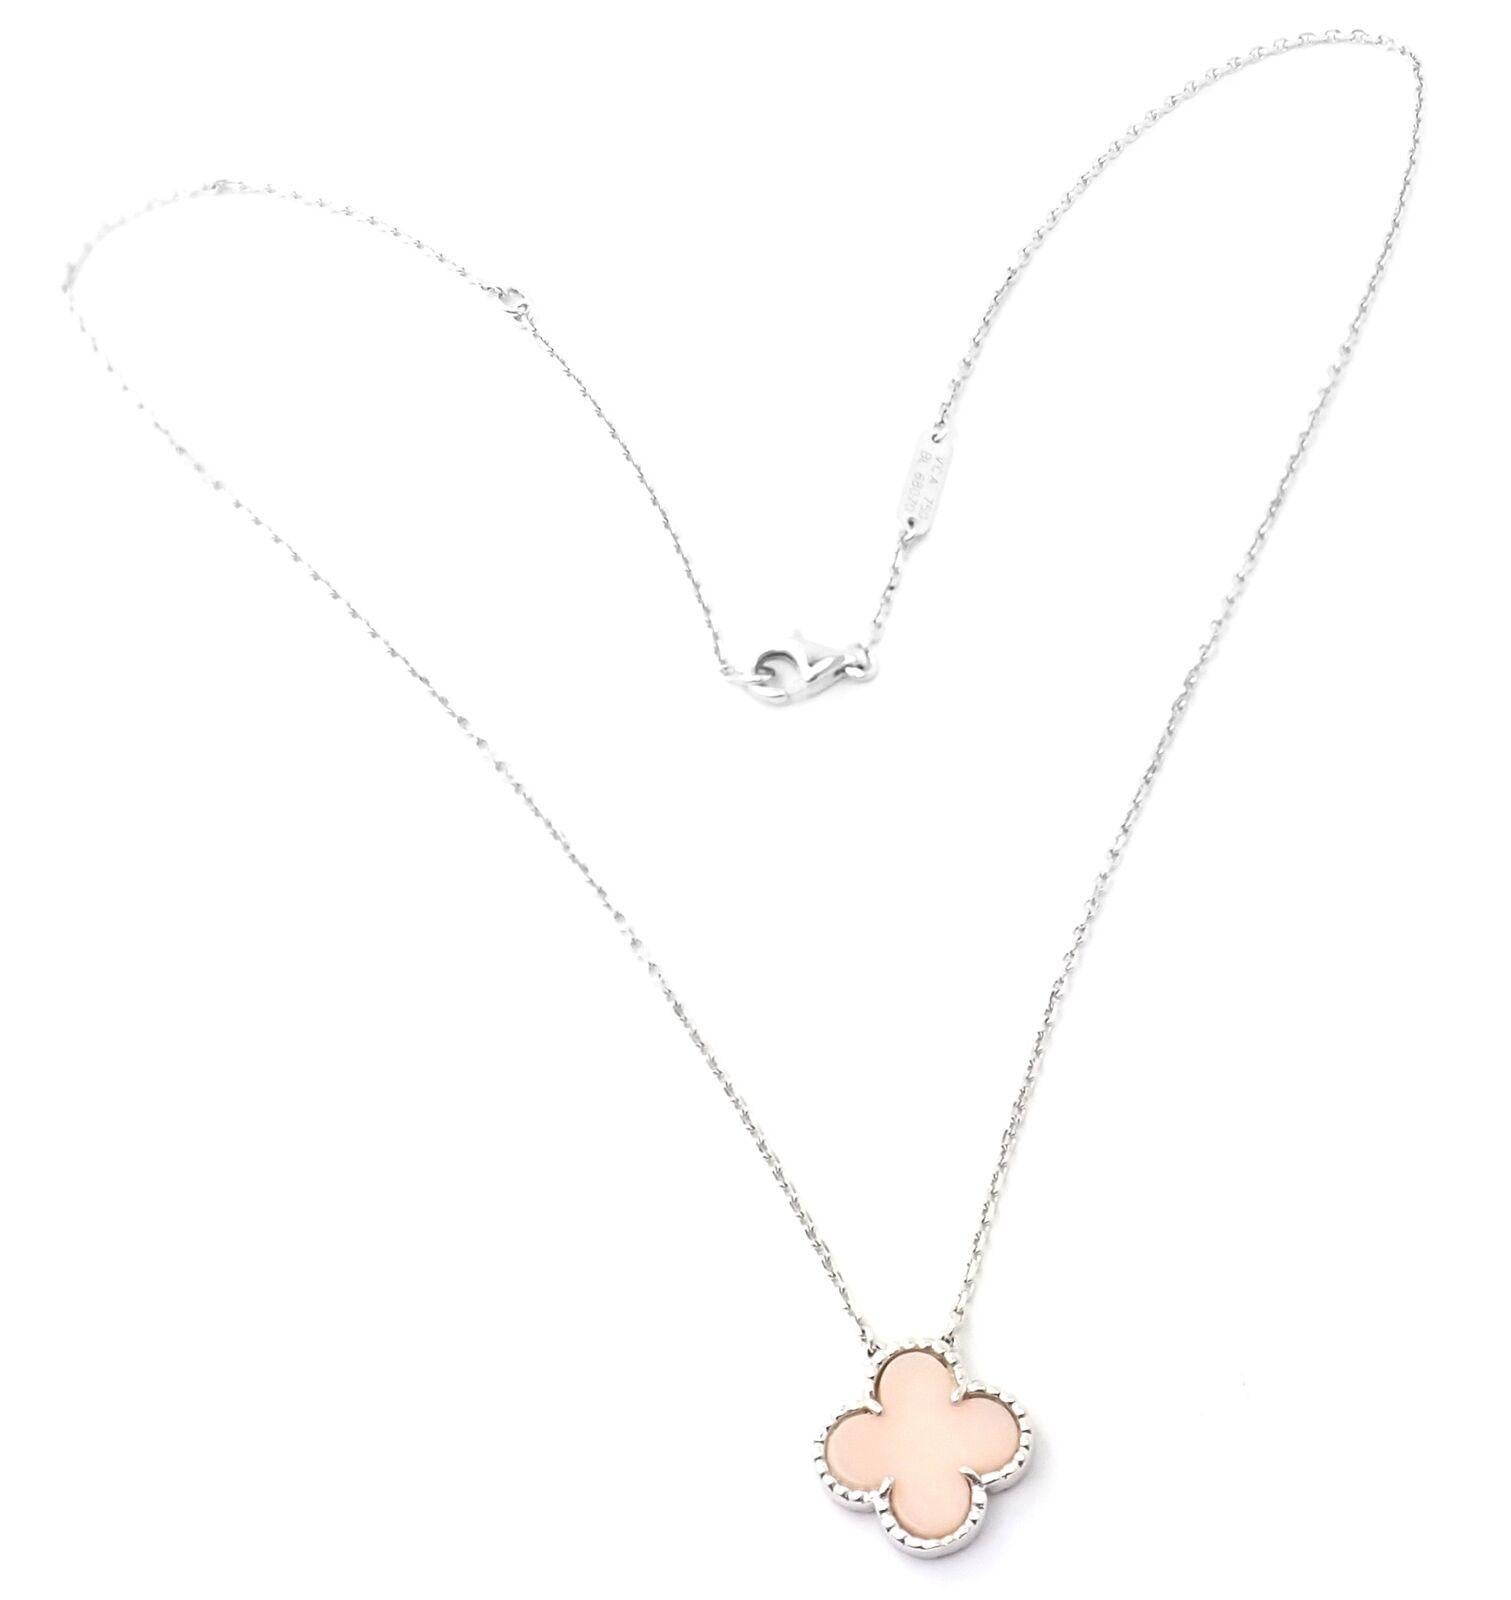 Uncut Van Cleef & Arpels Vintage Pink Opal White Gold Pendant Necklace